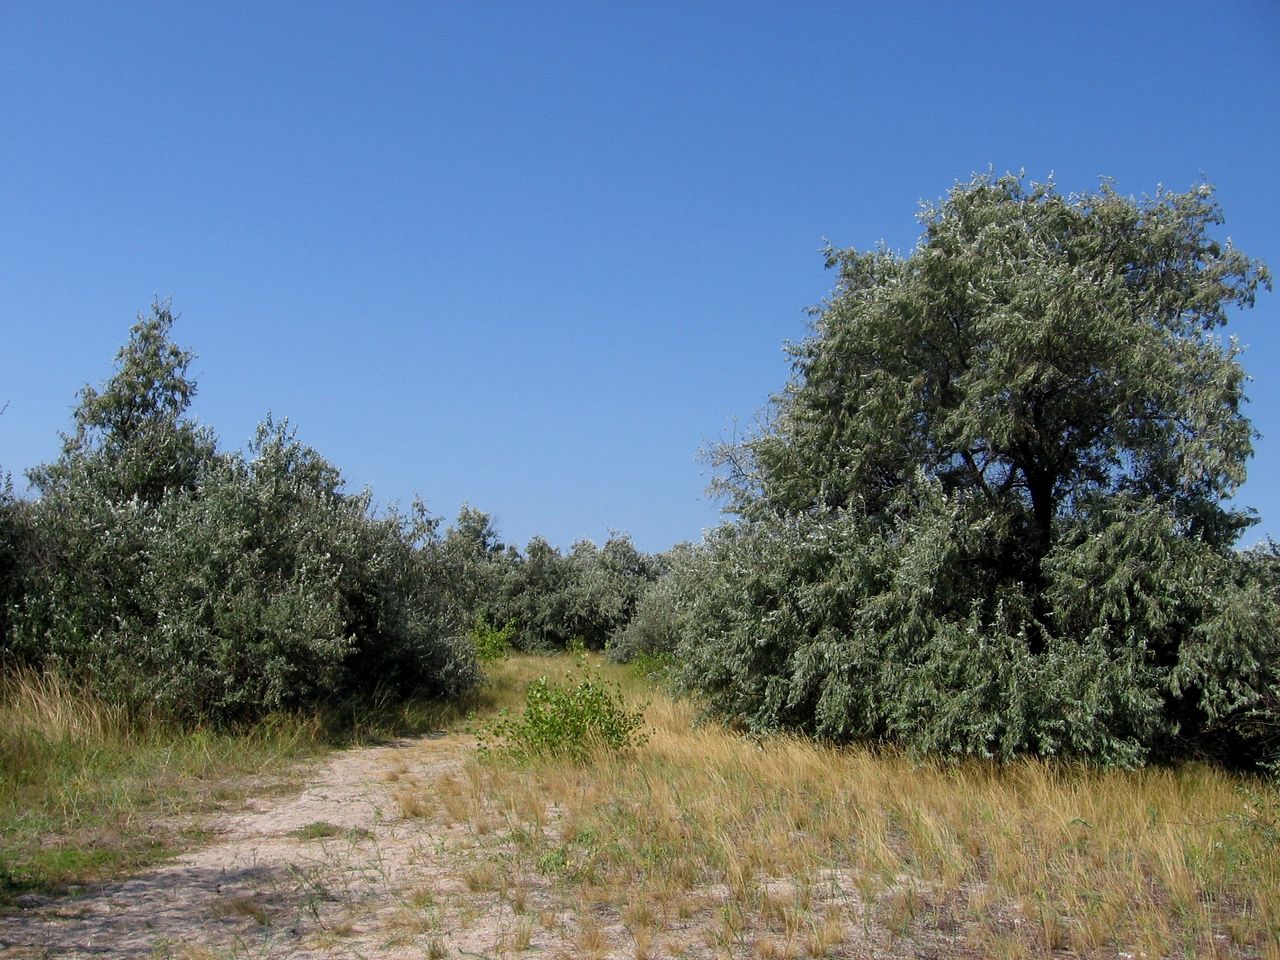 Бердянская коса, image of landscape/habitat.